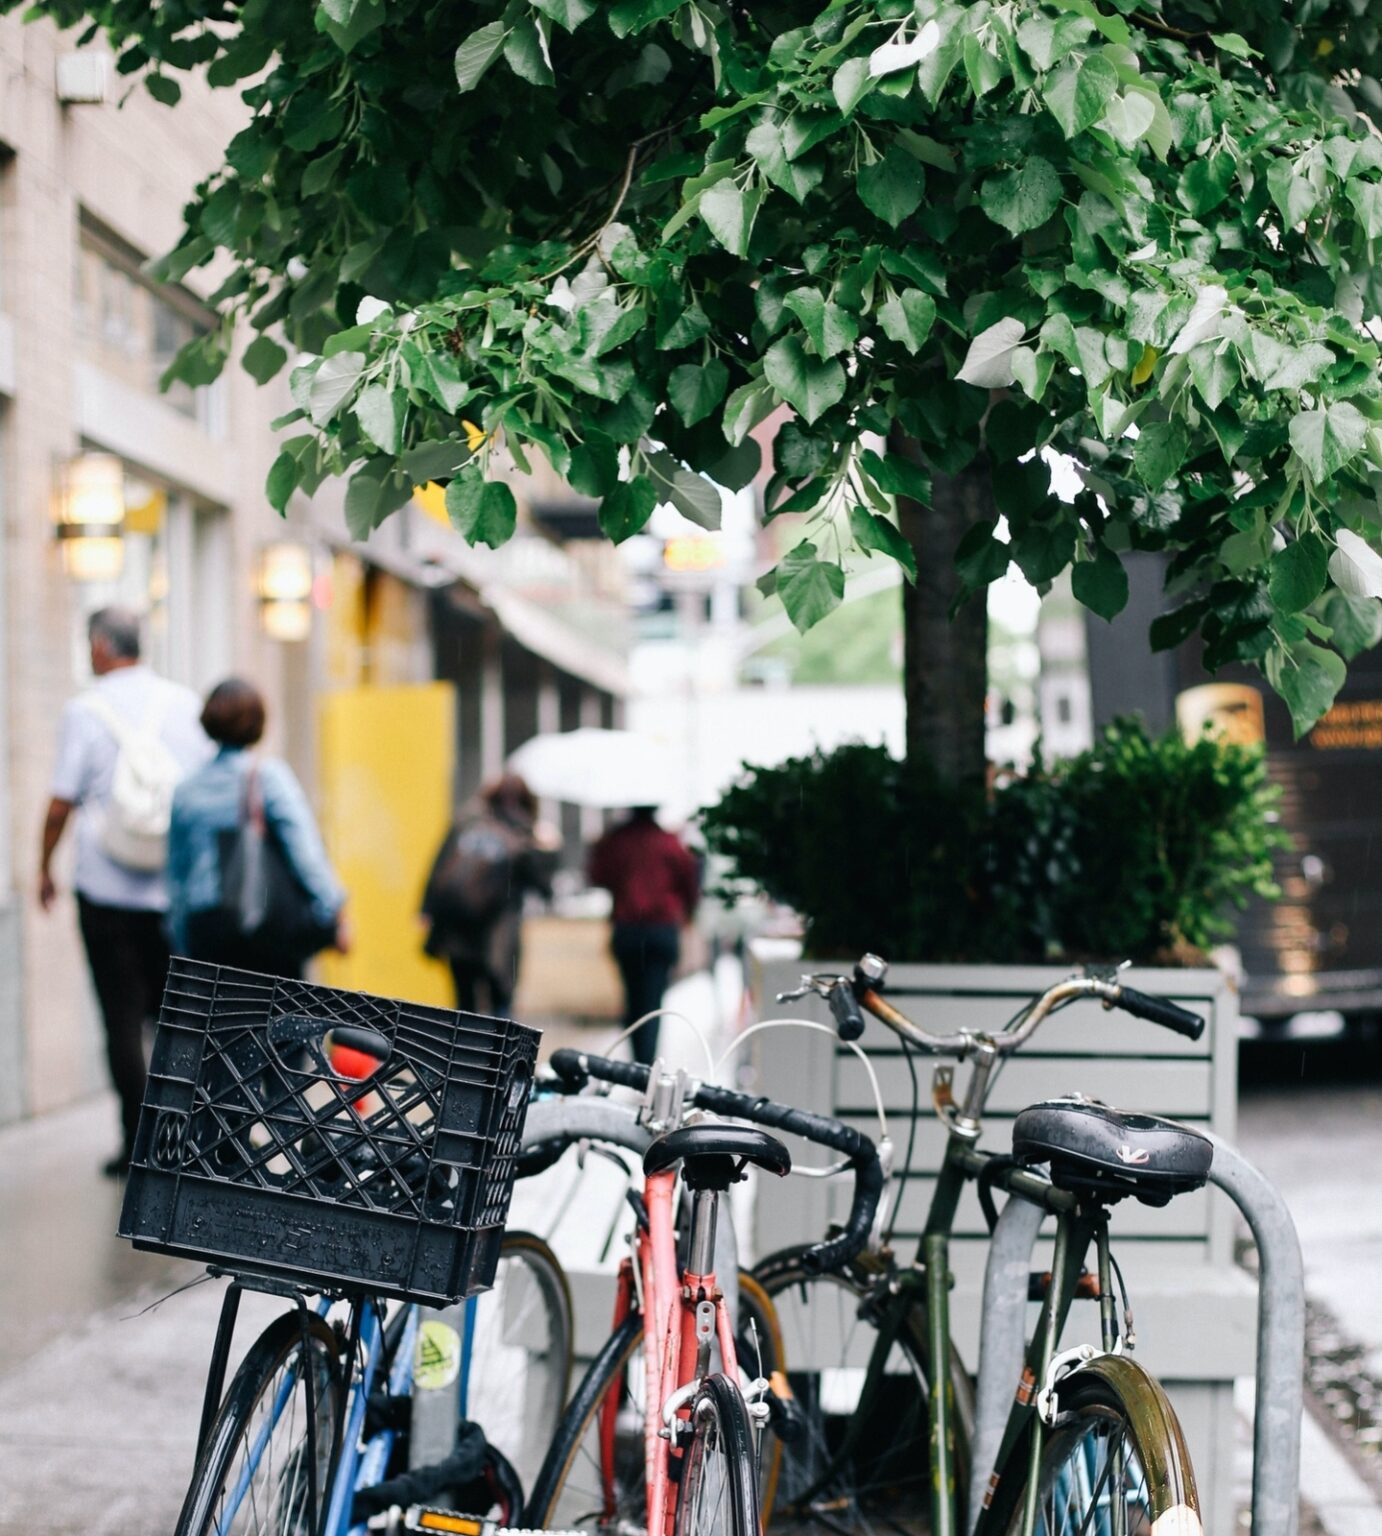 urban cycling bikes locked to city post